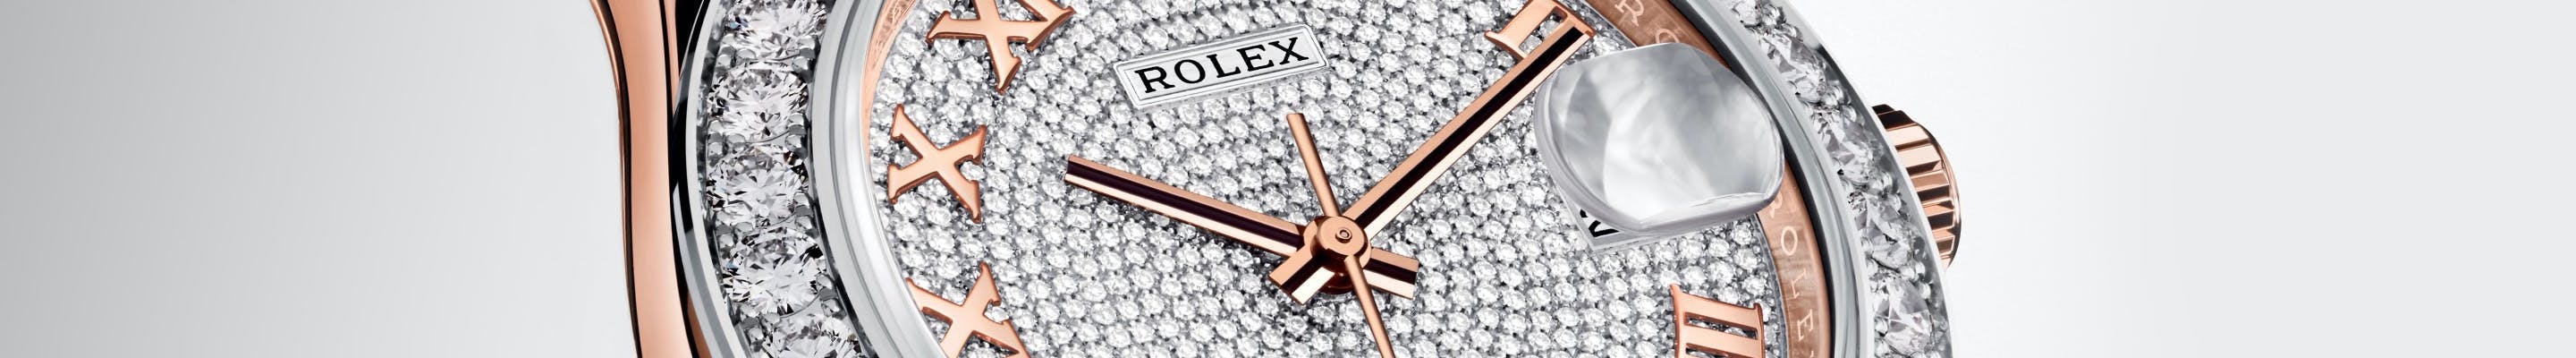 Rolex Pearlmaster at Eiseman Jewels in Dallas, Texas